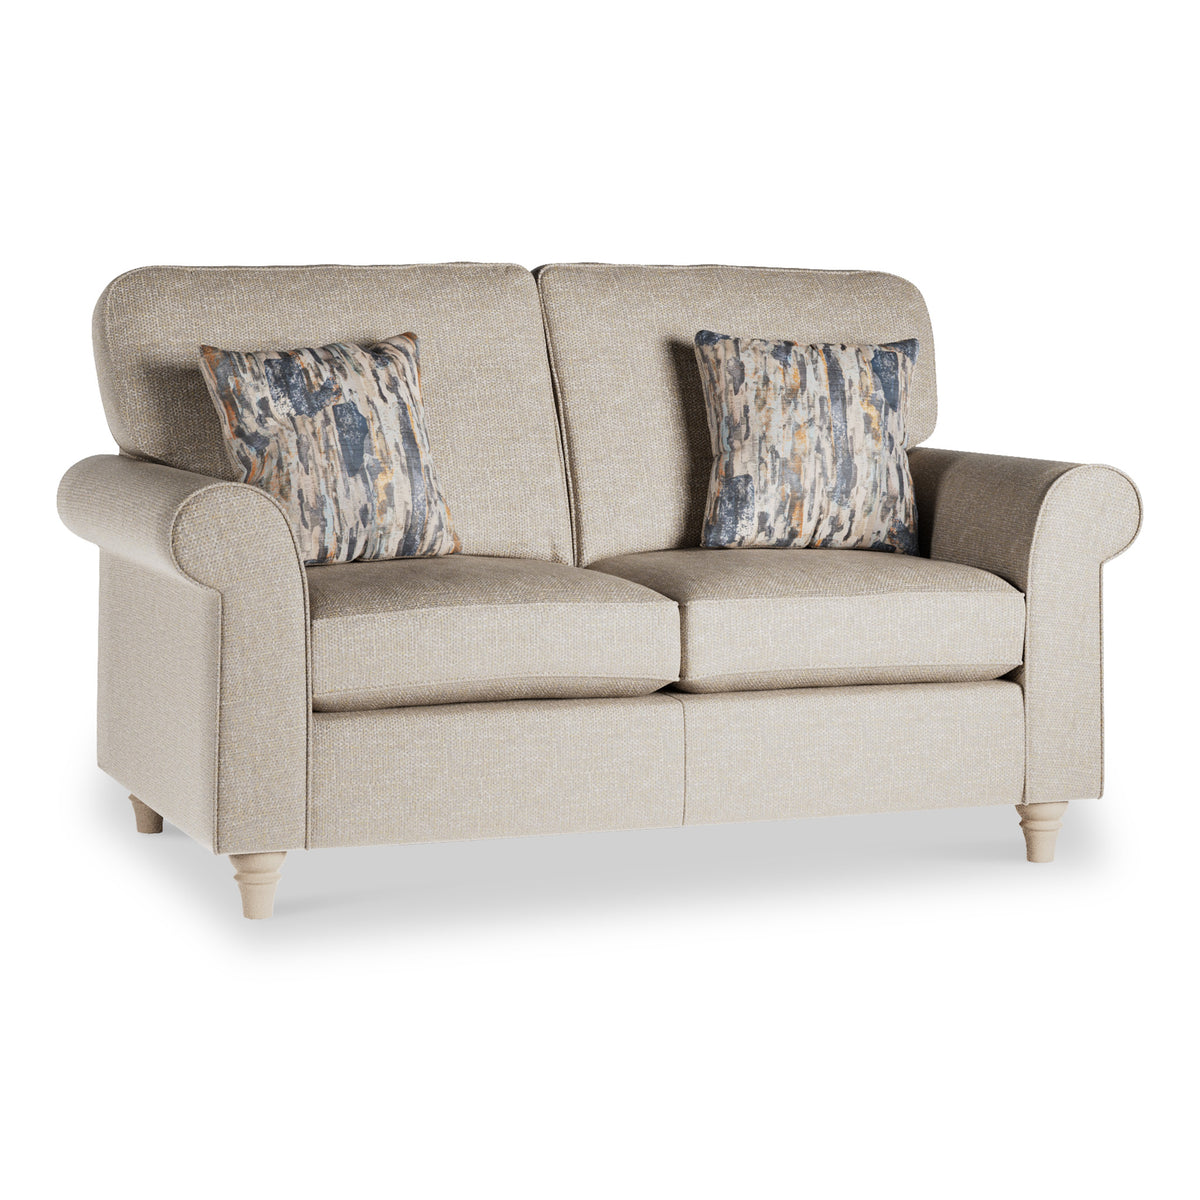 Jude Dijon 2 Seater Sofa from Roseland Furniture